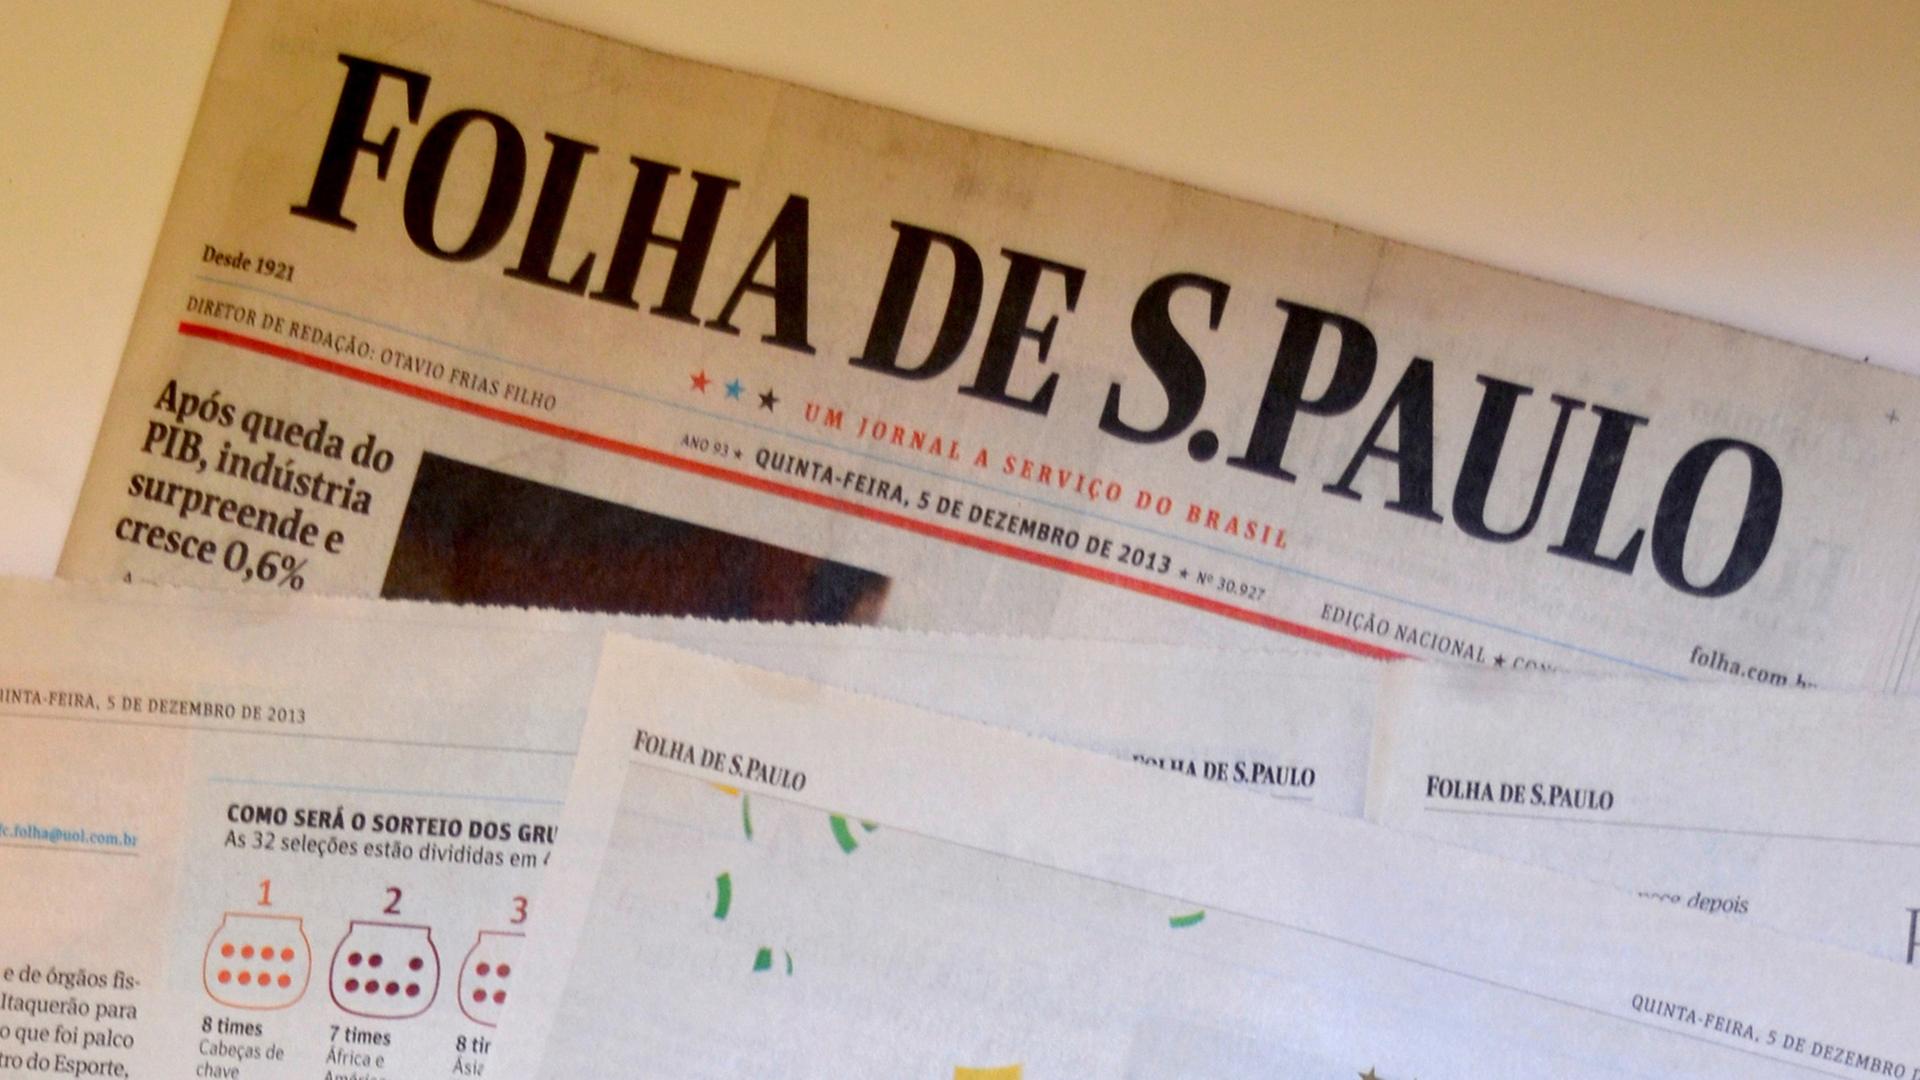 Die brasilianische Zeitung Folha de Sao Paulo zu sehen, fotografiert am 05.12.2013 in Rio de Janeiro, Brasilien.